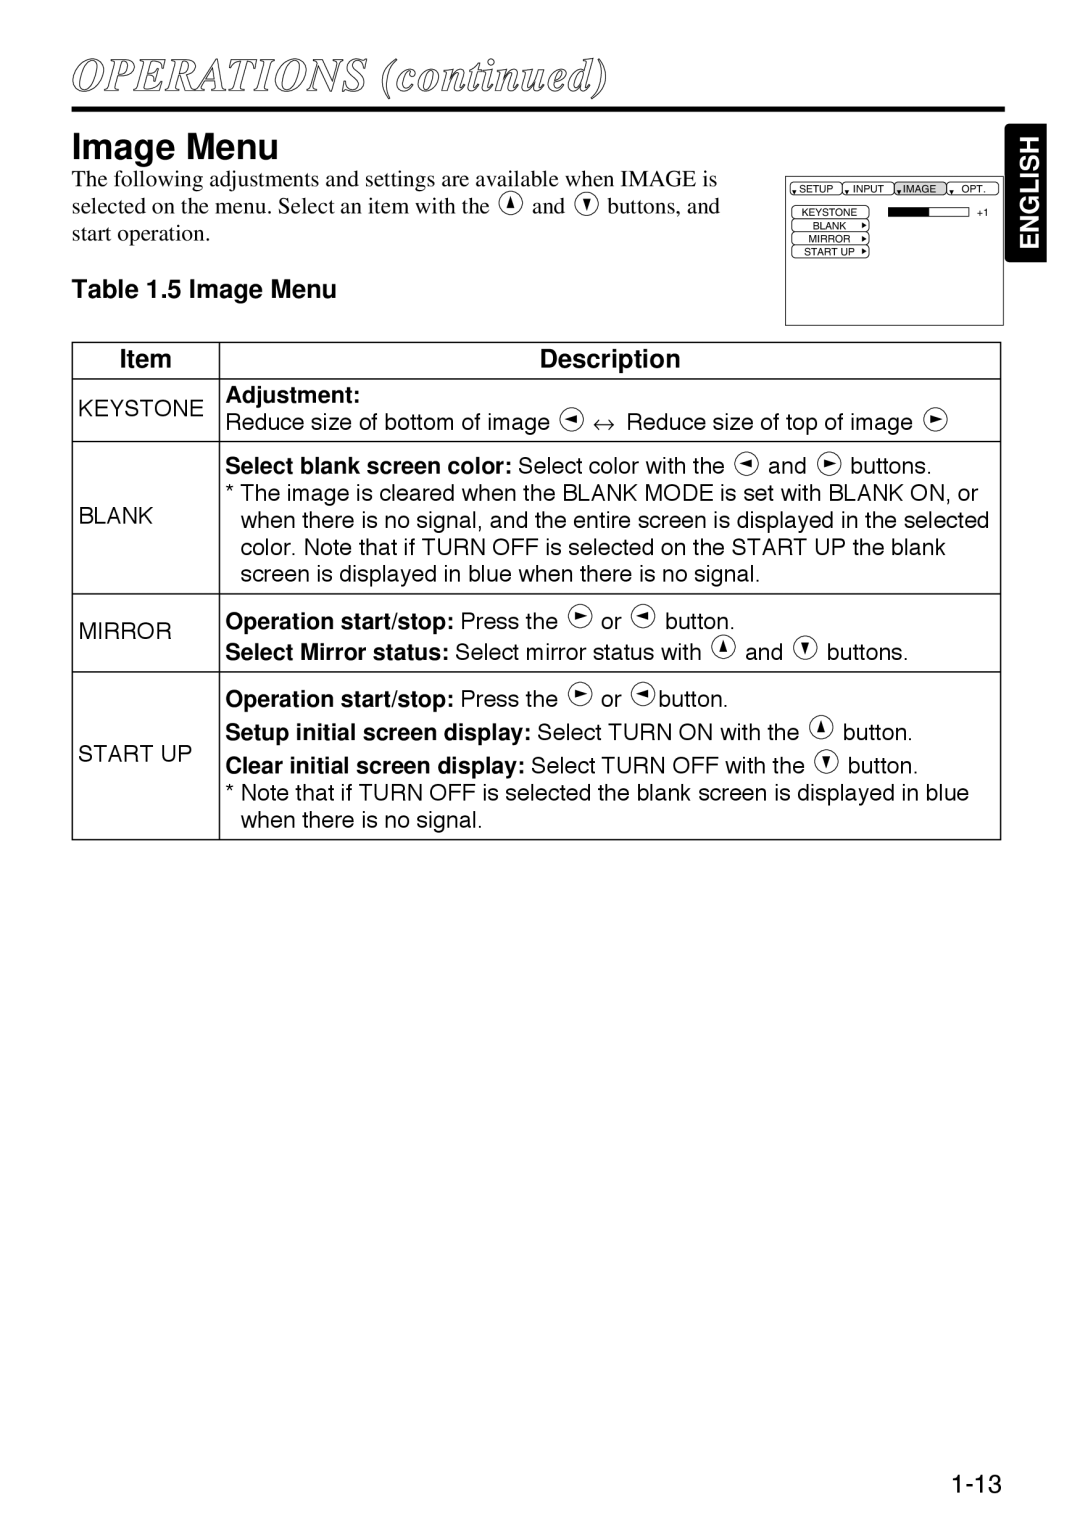 Polaroid SVGA 270 manual 5 Image Menu, OPERATIONS continued, English, Description 